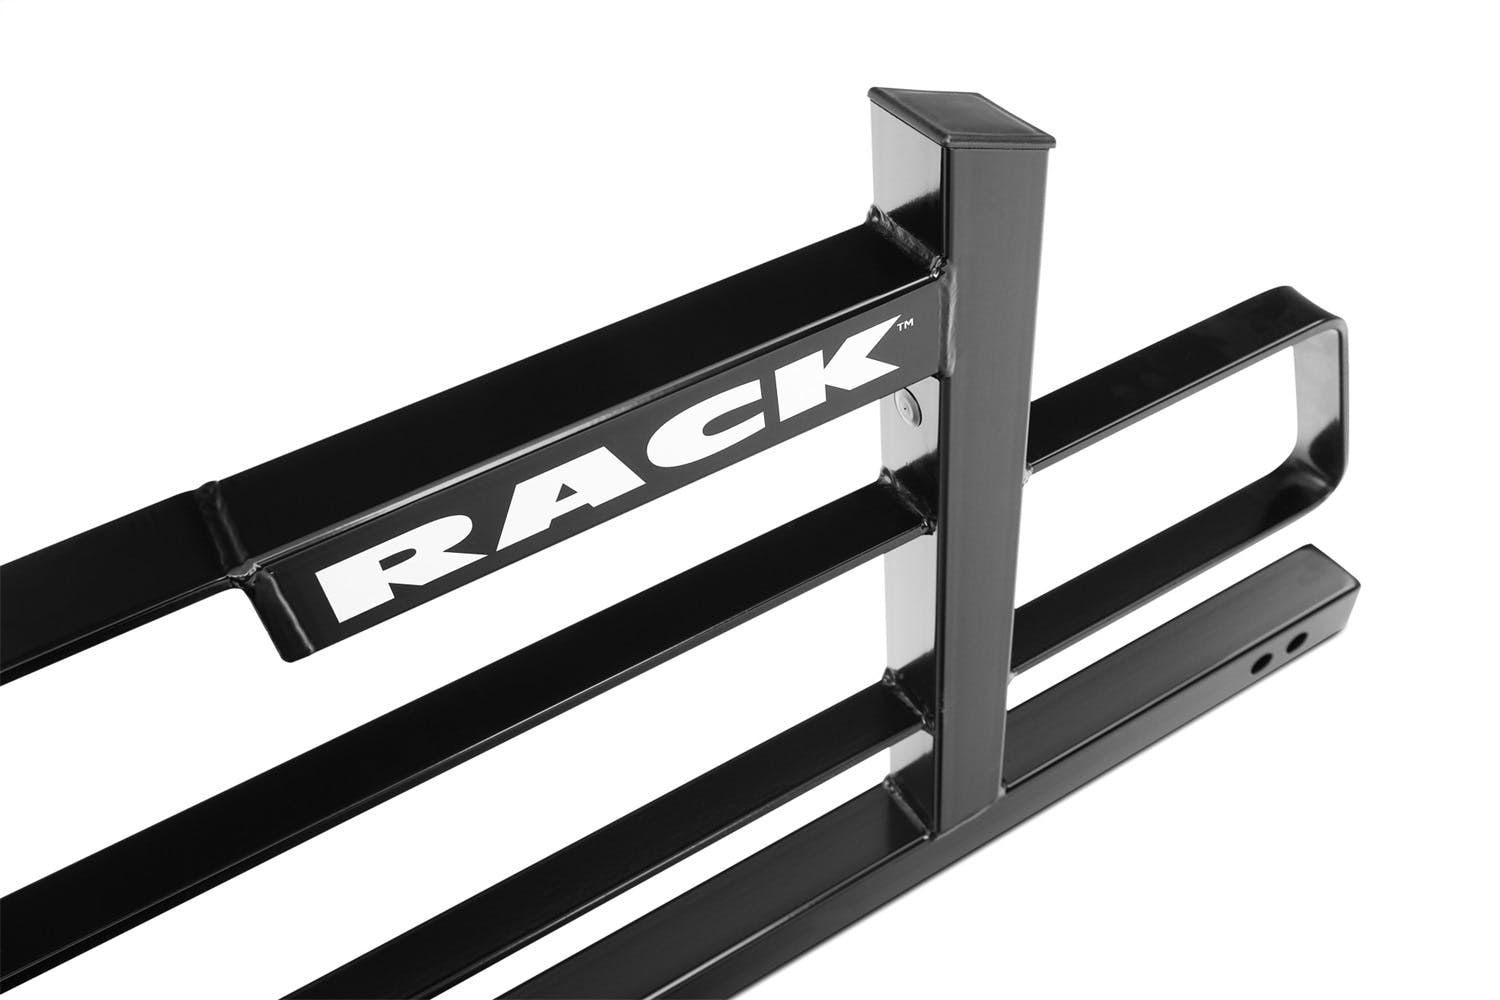 BACKRACK 15021 Frame Only, Hardware Kit Required - 50201, 50221